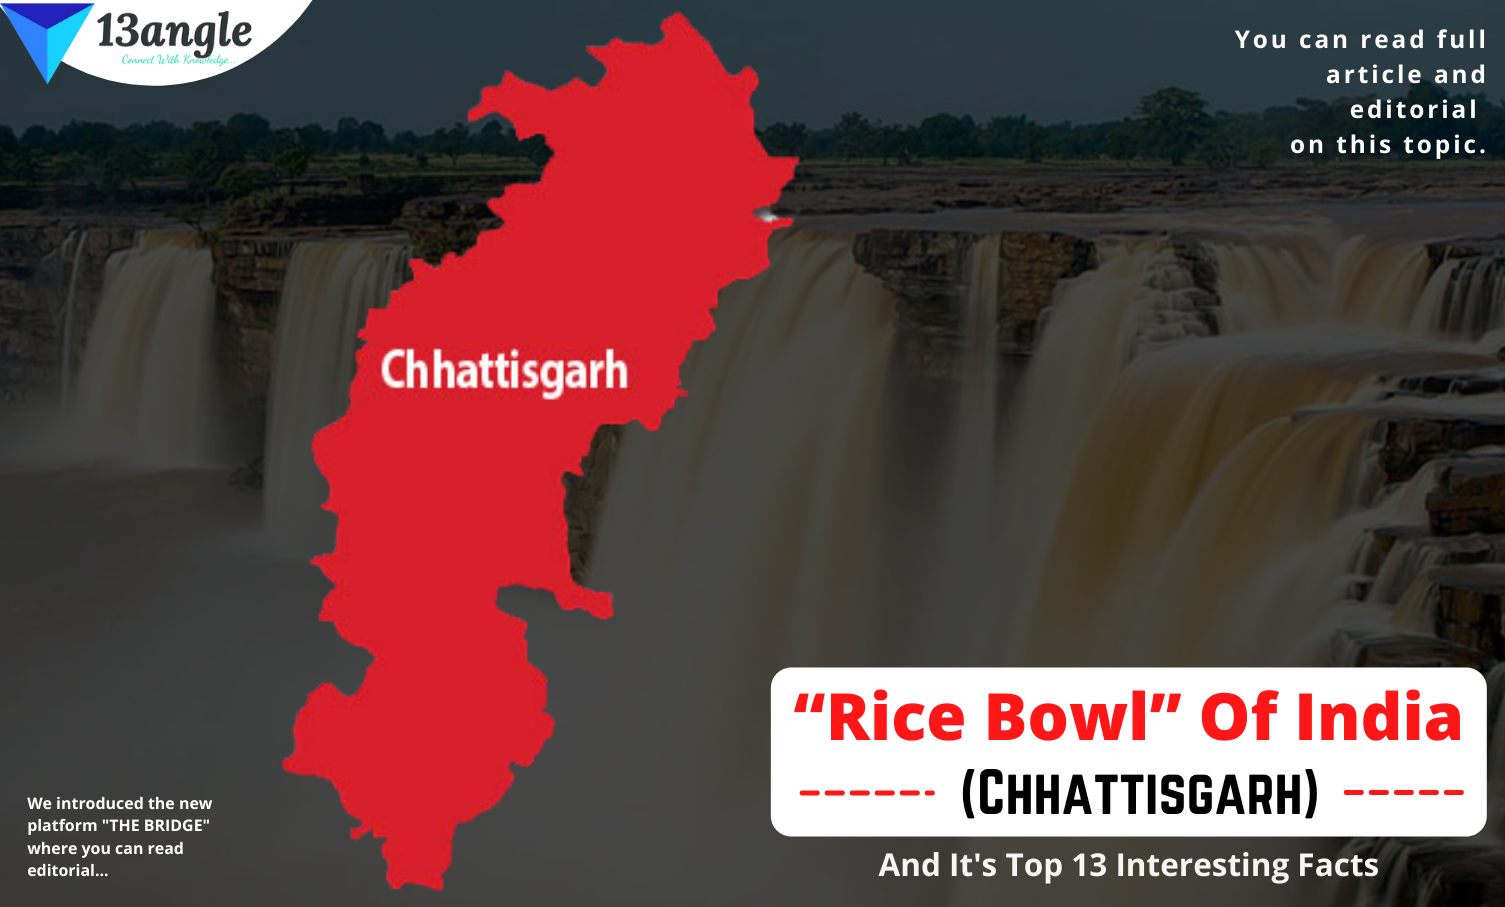 Chhattisgarh- “Rice Bowl” Of India- 13angle.com